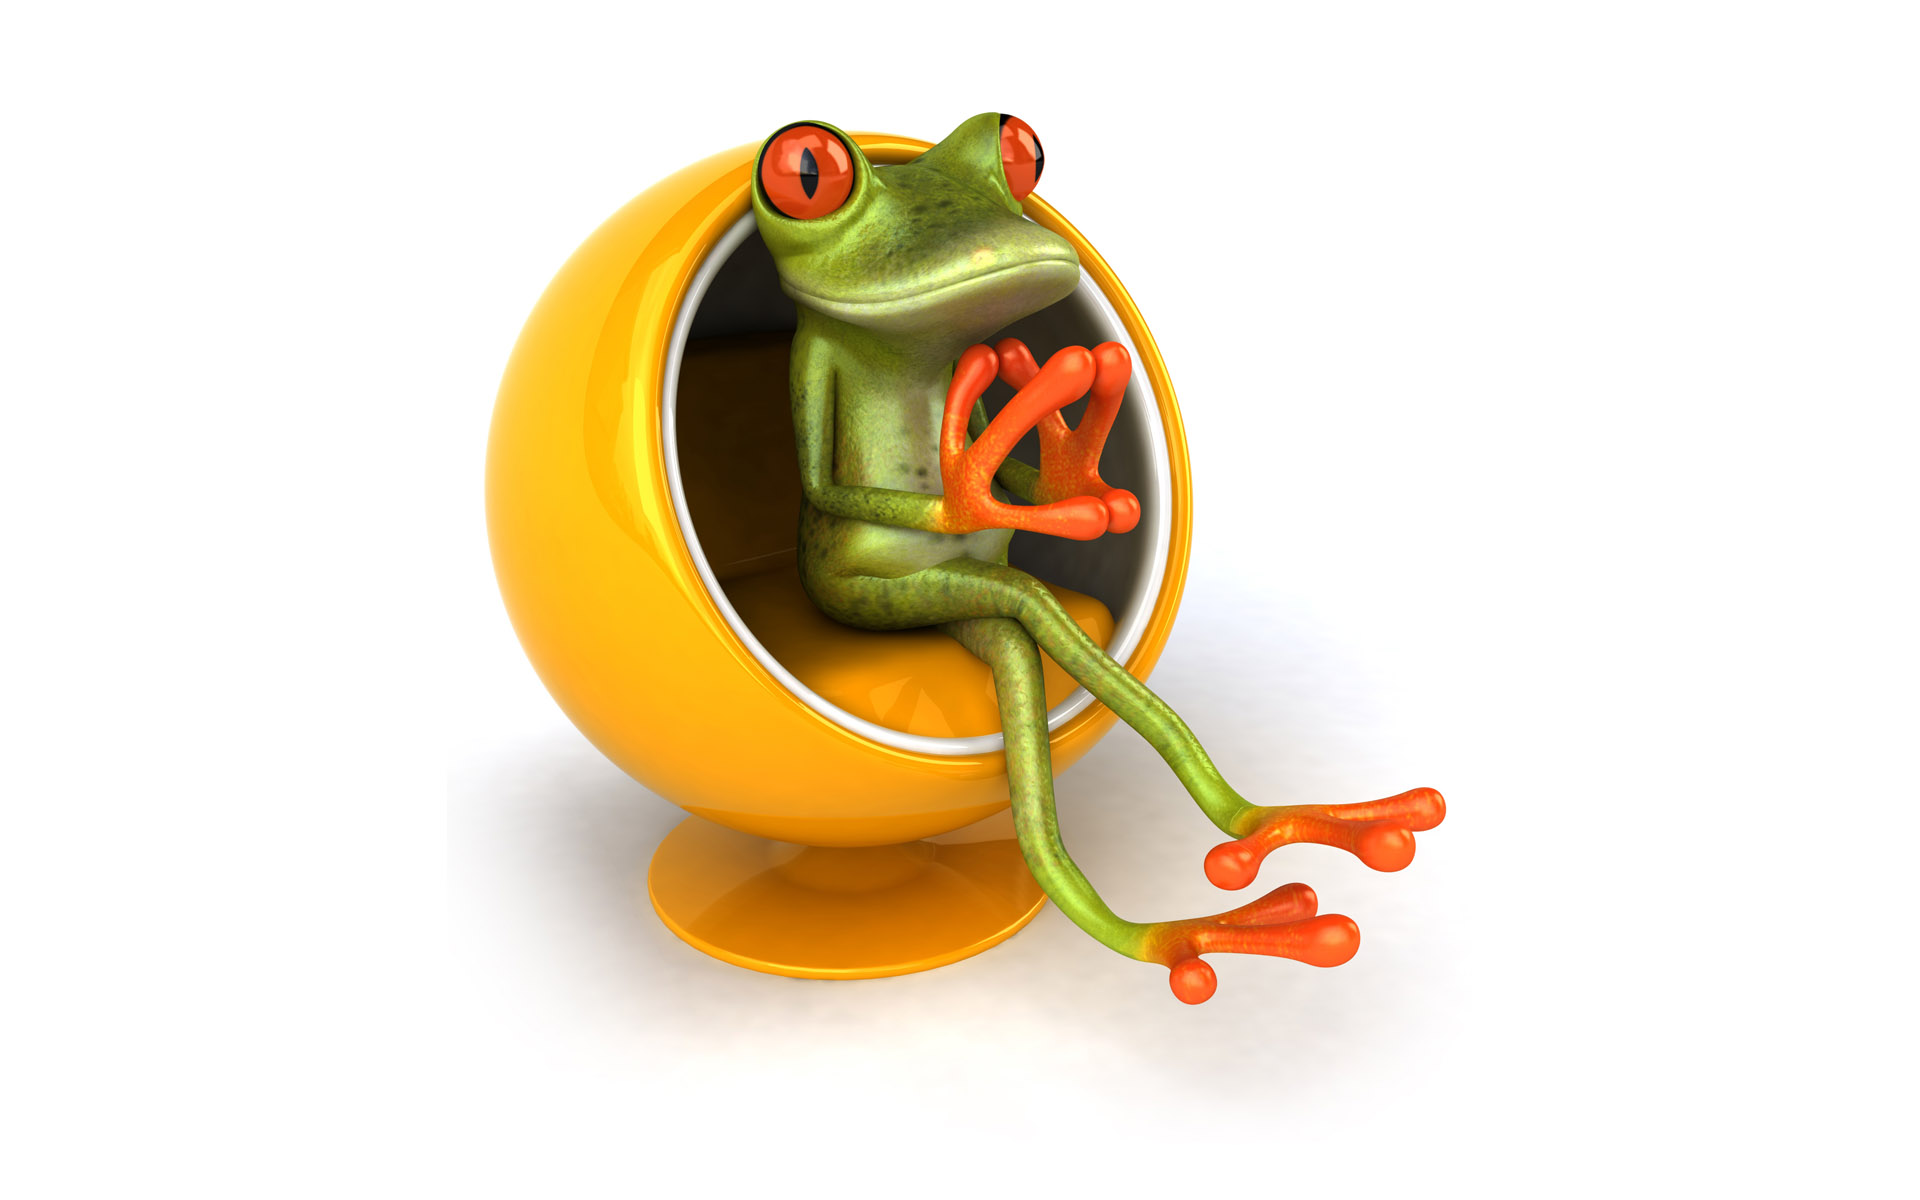 Frog 3d Wallpaper For Desktop Is A Great Your Puter